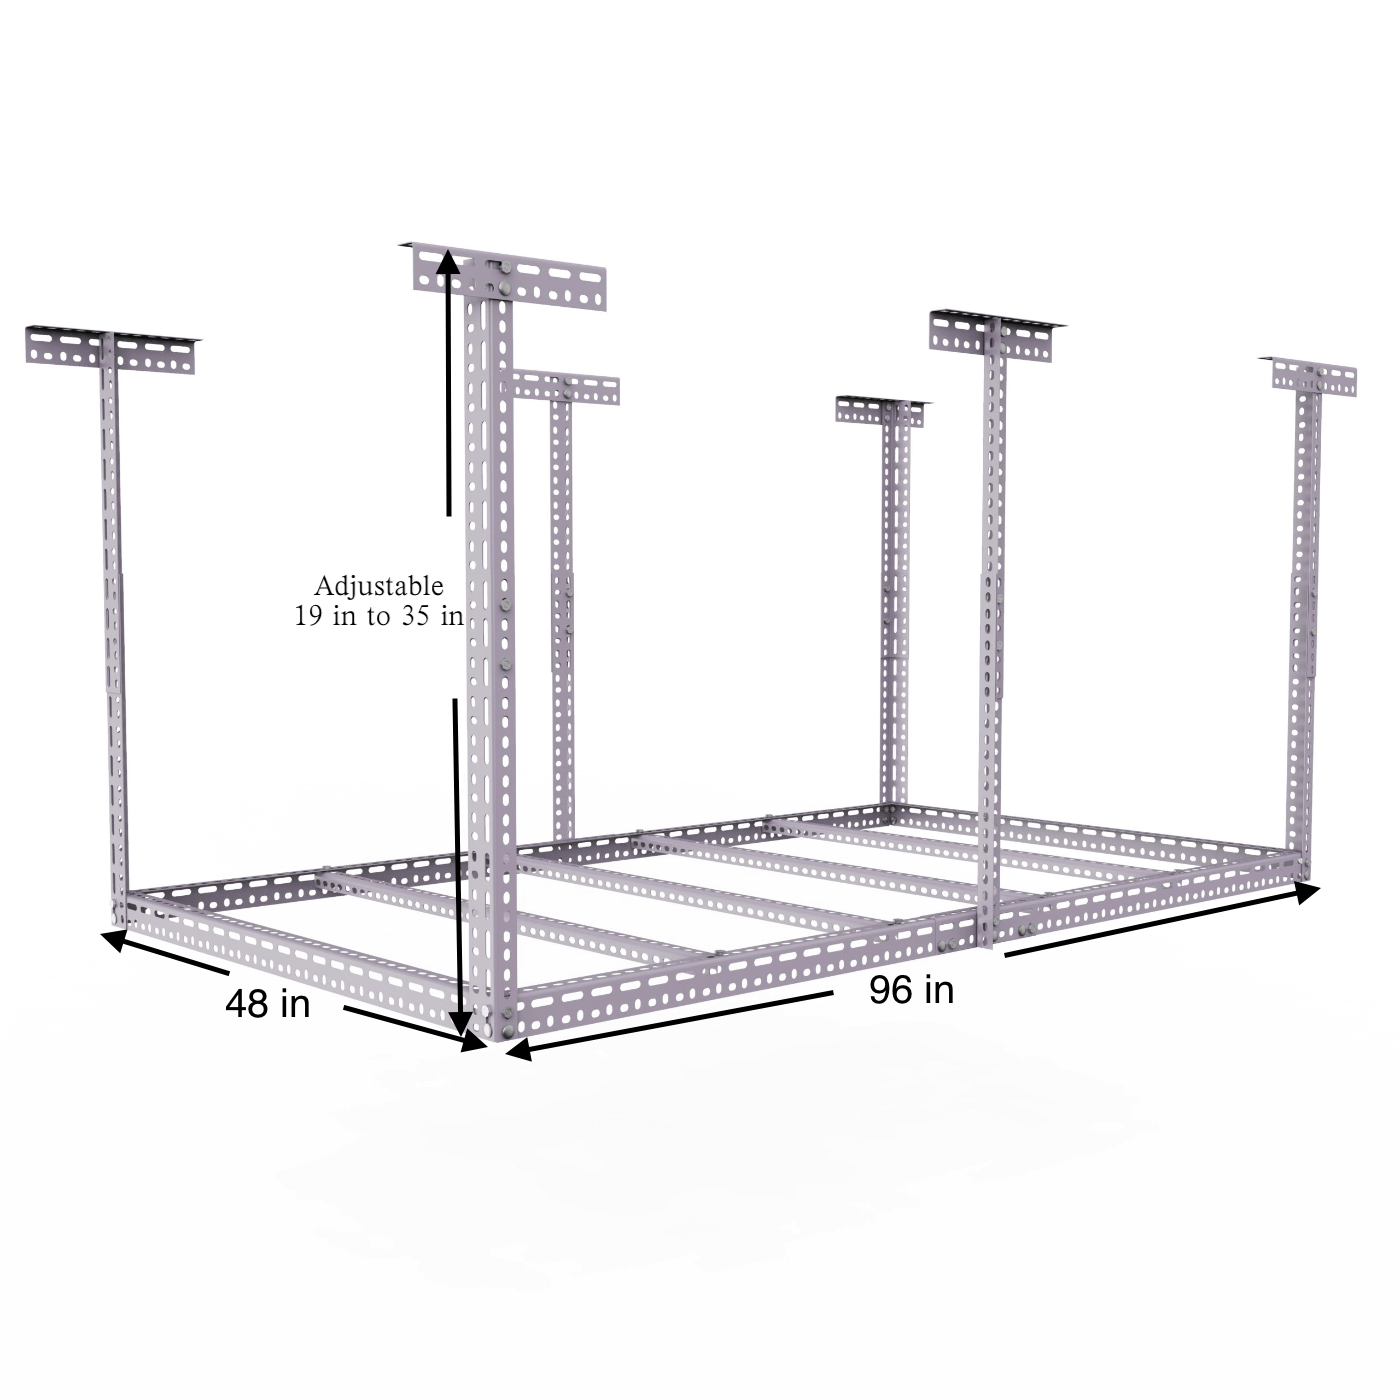 Top-notch Heavy-Duty Garage Storage: 1000lb (4 x 8)ft Overhead Ceiling Rack for Efficient Organization